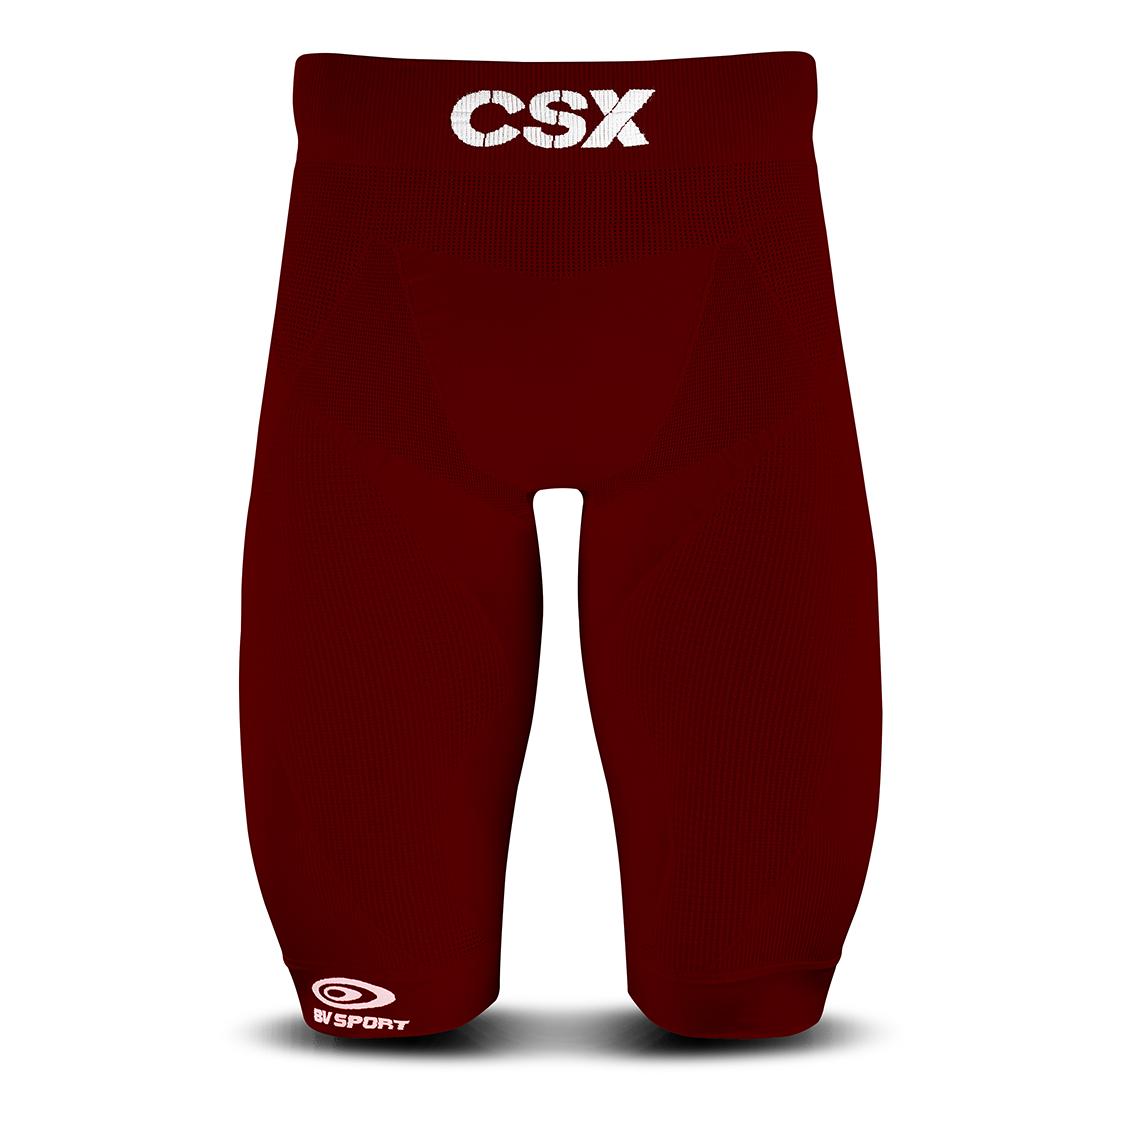 BV Sport CSX Cuissard D'Effort Bordeaux S 